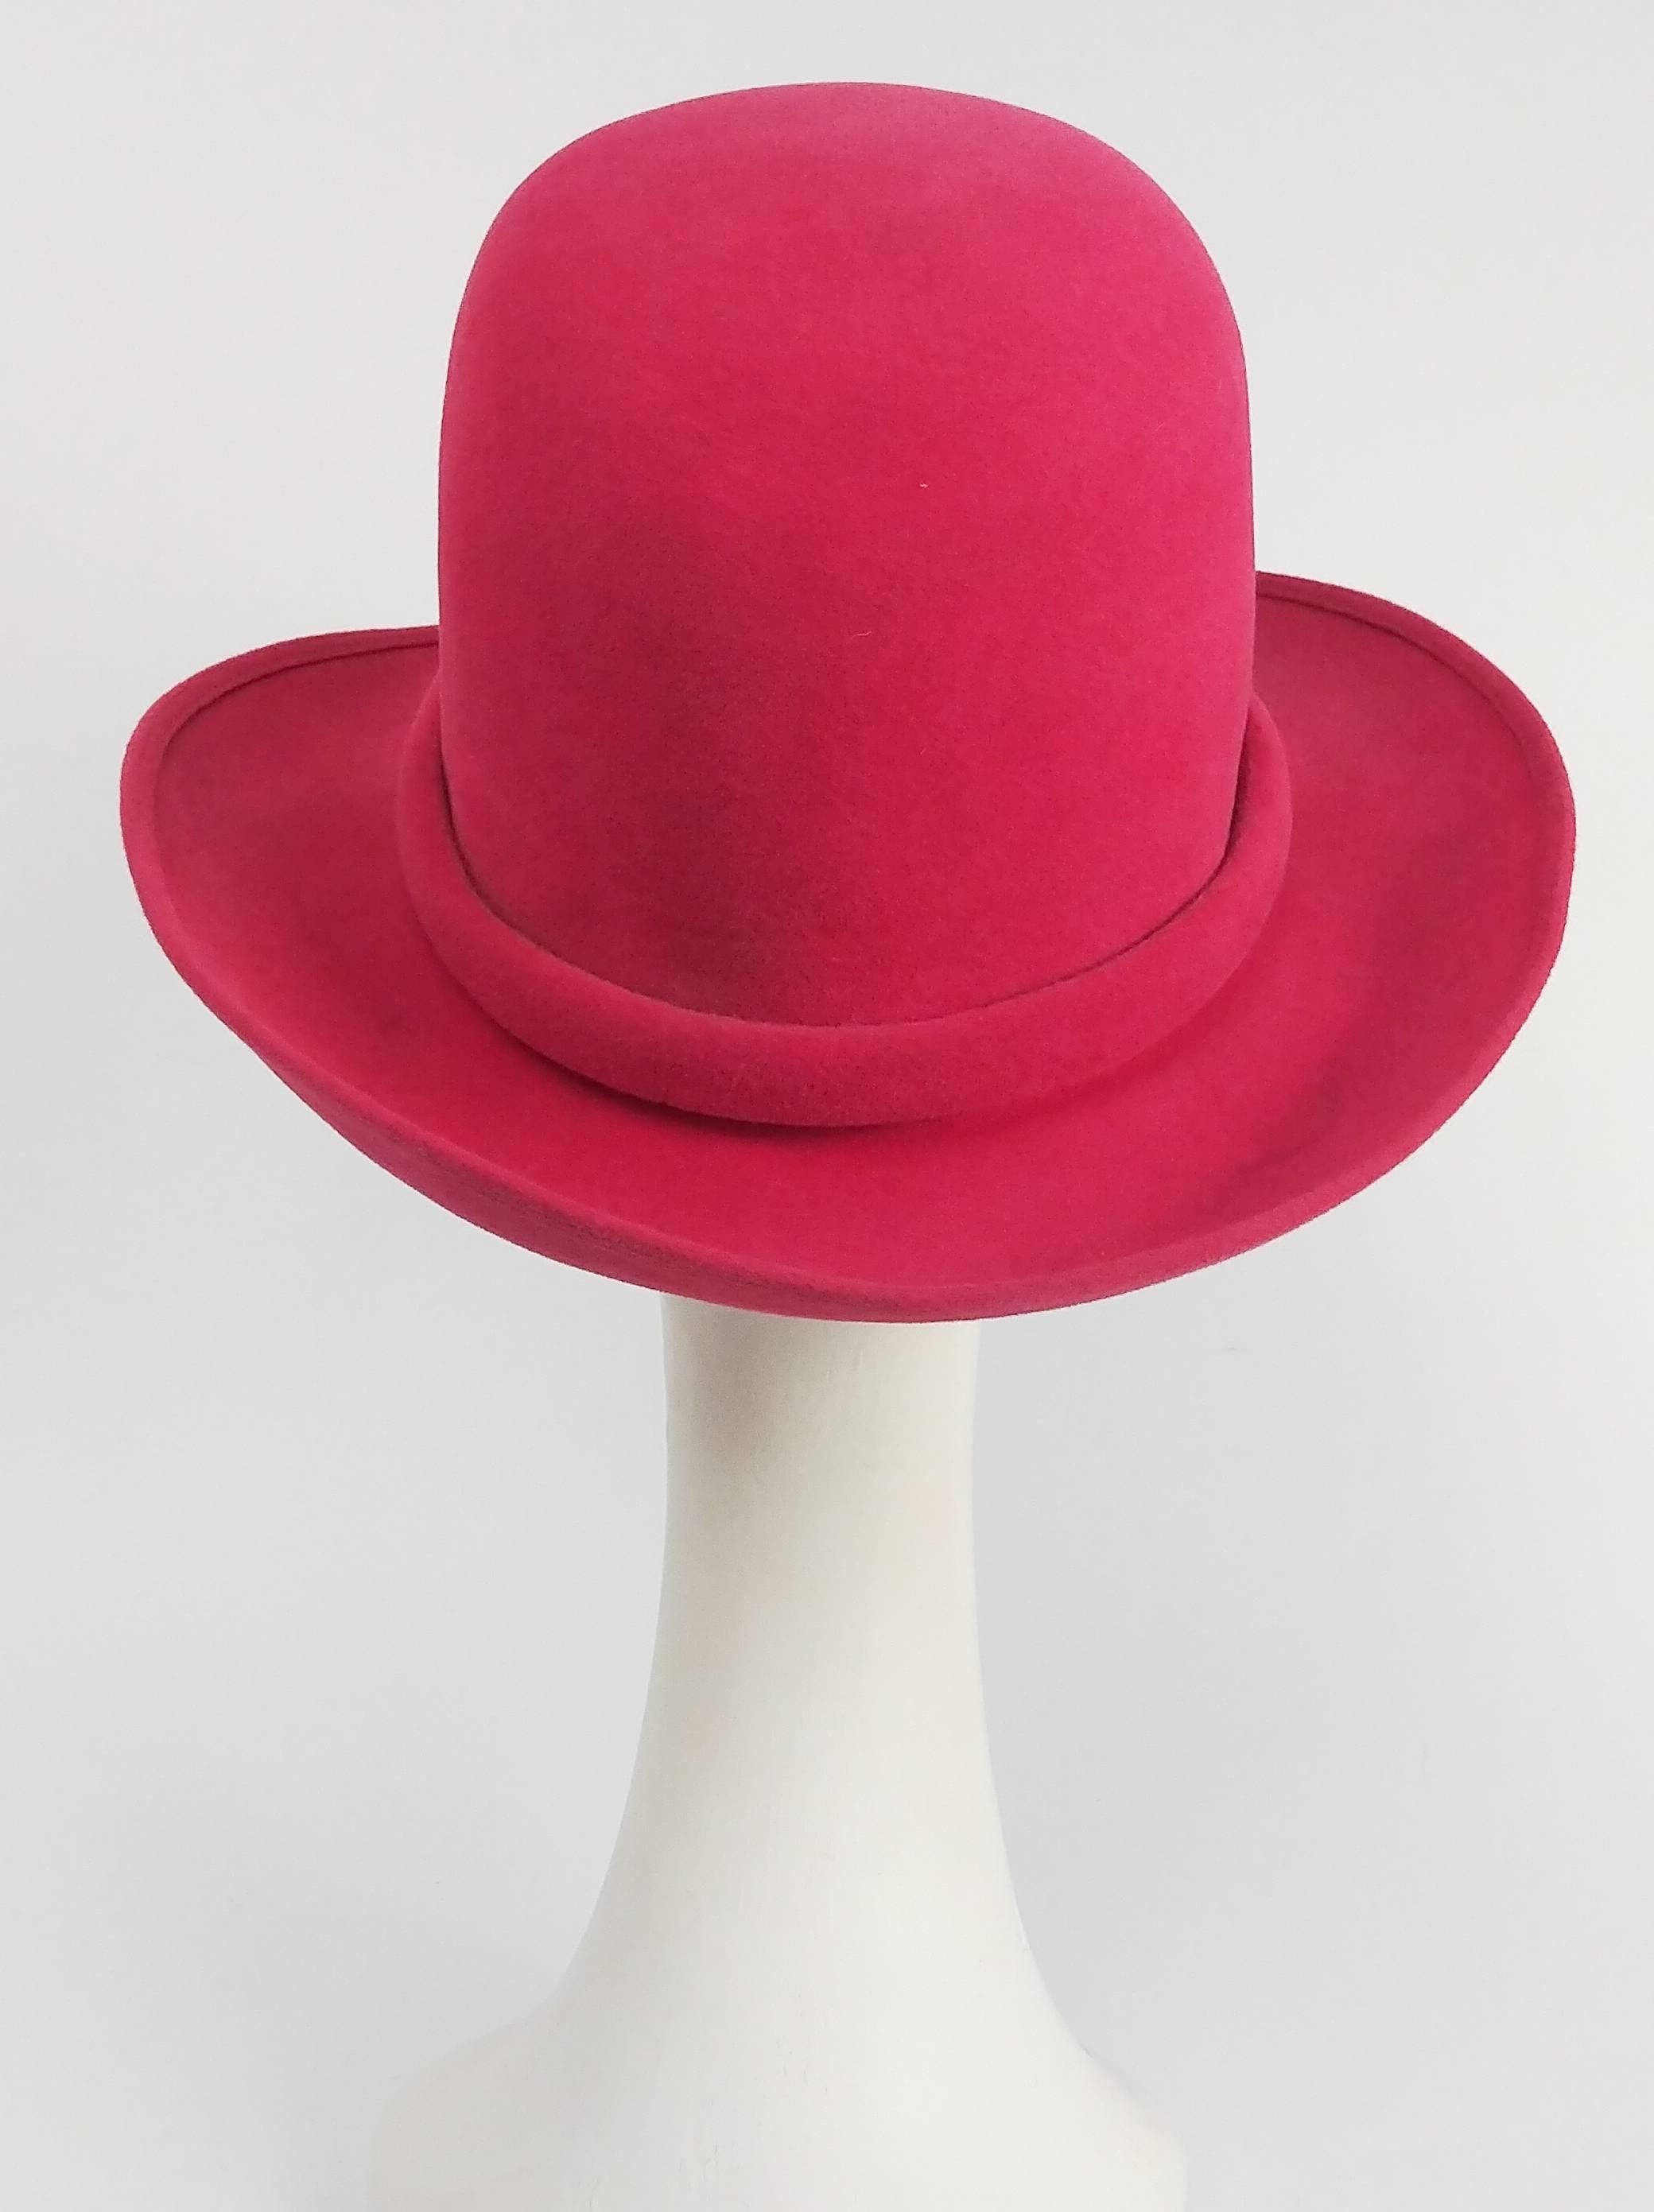 1970s Hot Pink Borsalino Felt Hat. Satin hat band. Marked 22 1/2.